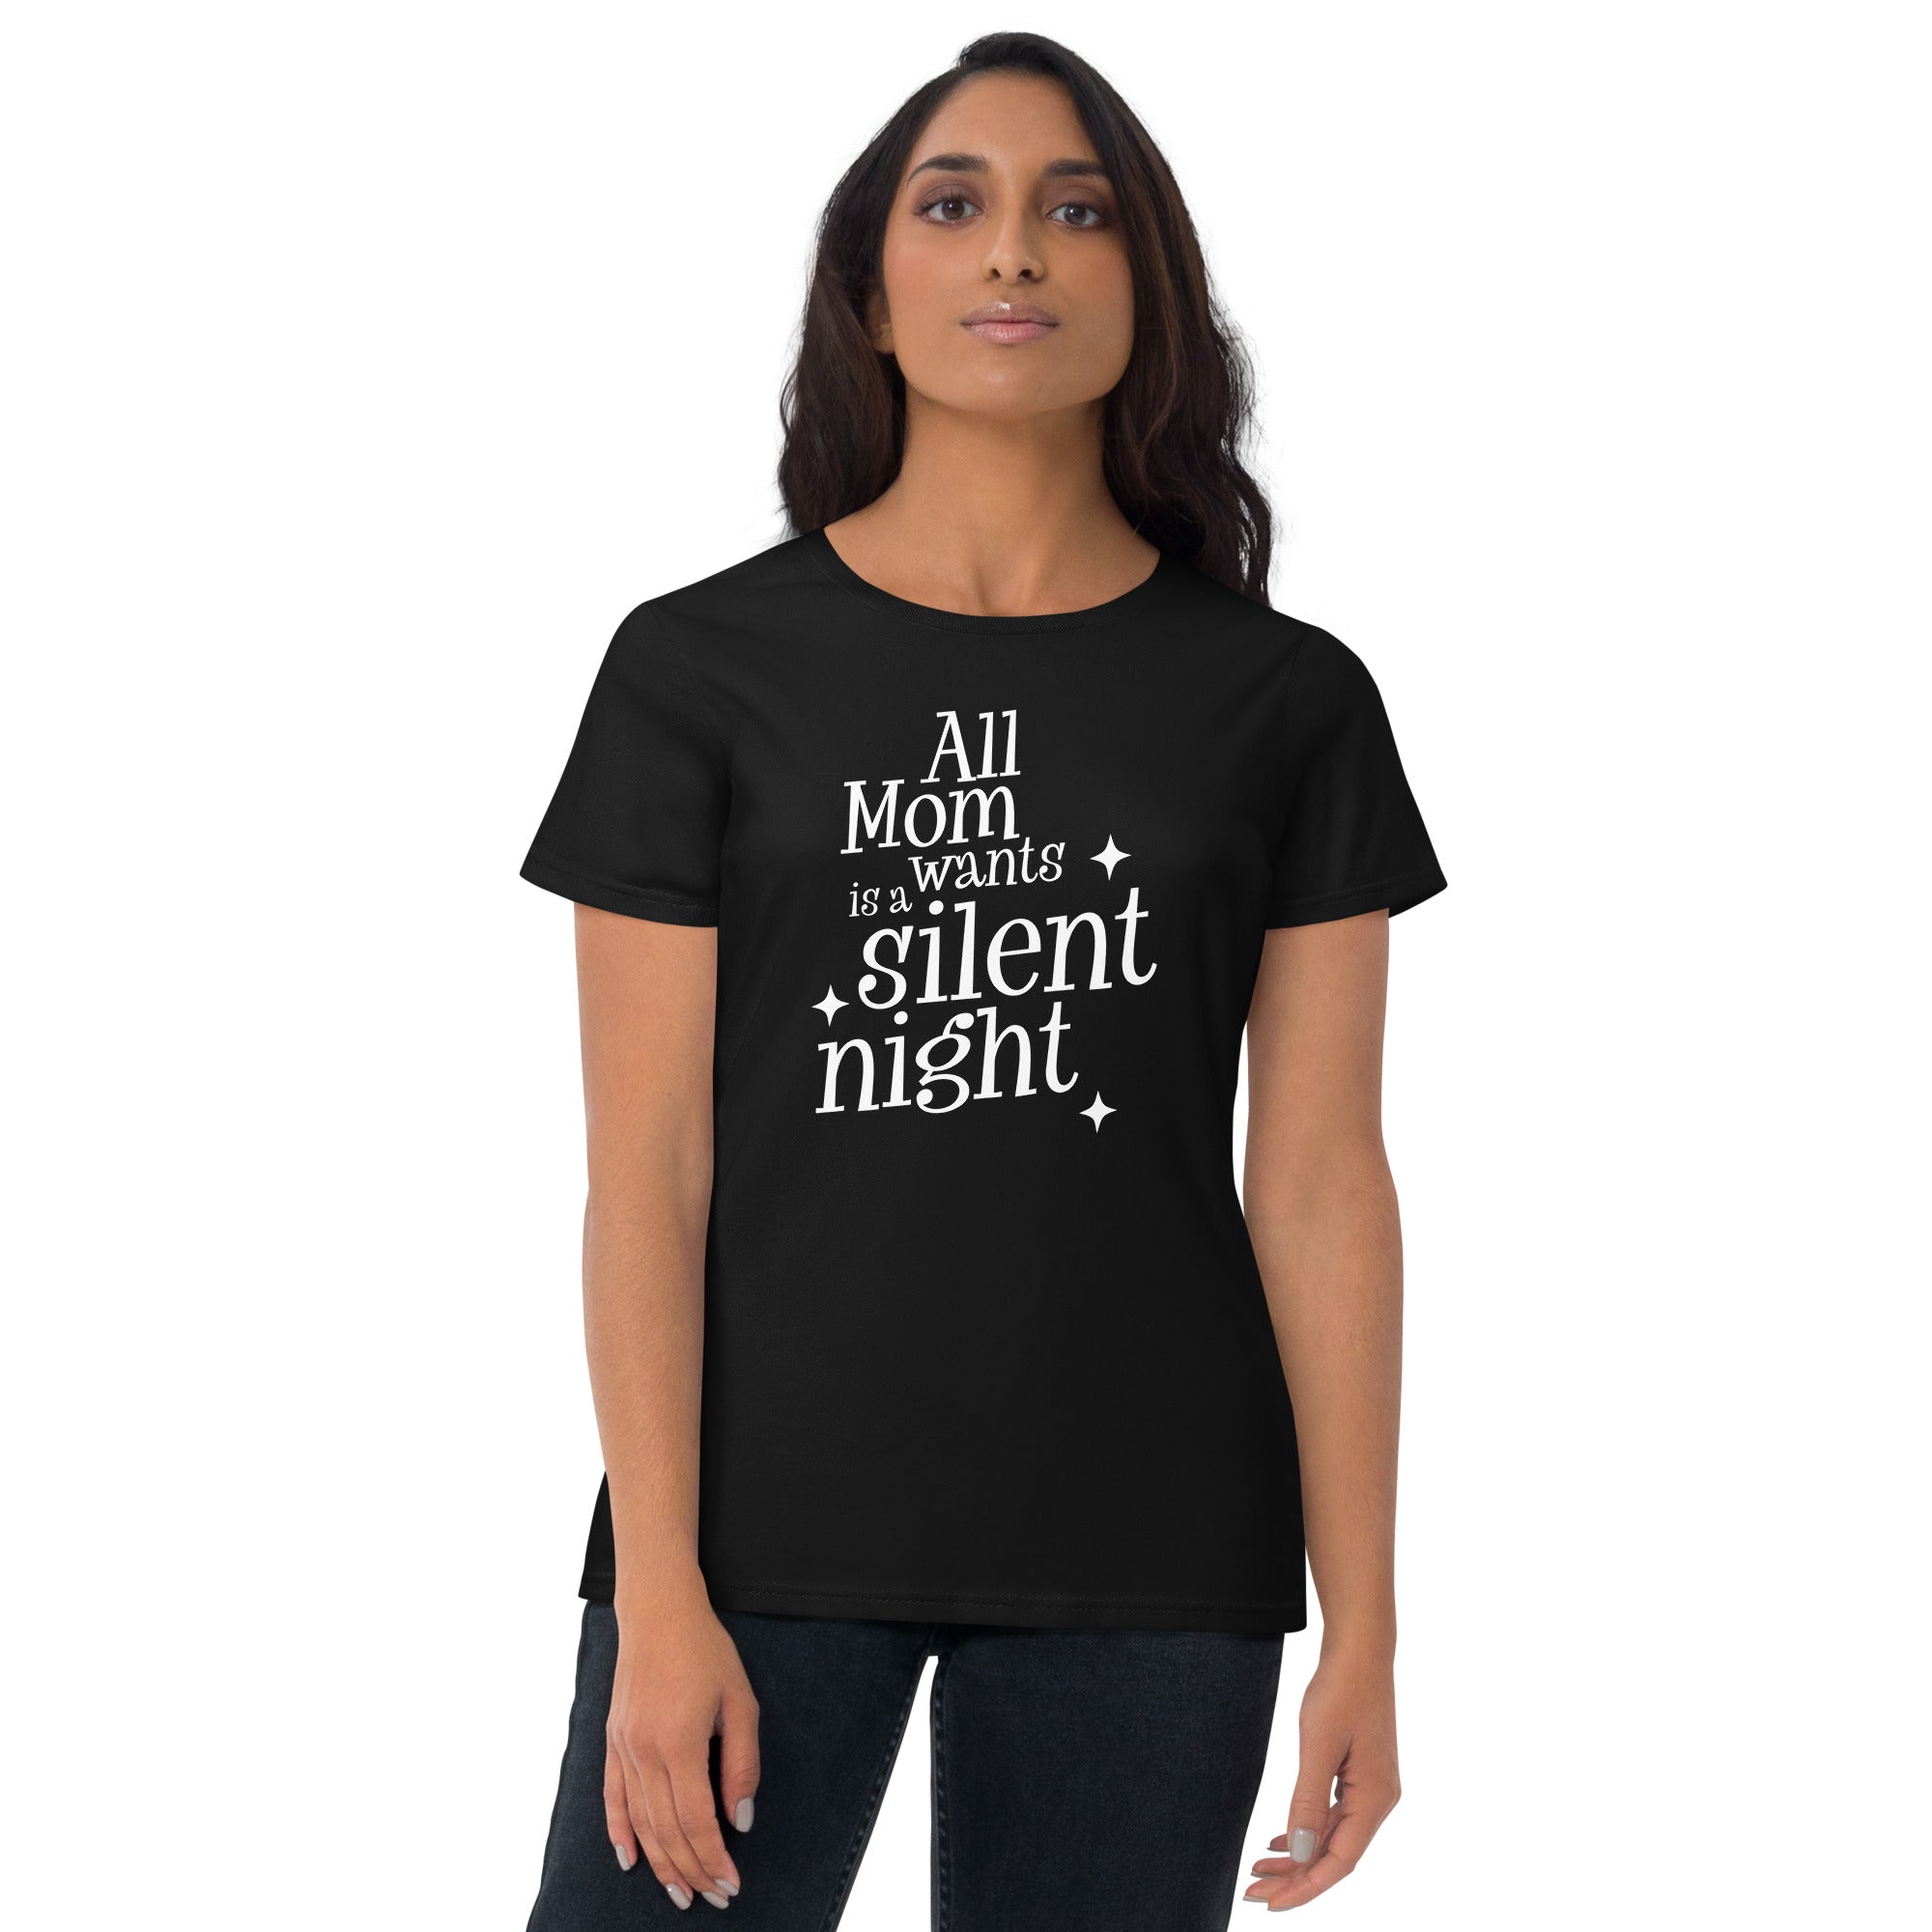 All Mom Wants Is A Silent Night - Women's short sleeve t-shirt